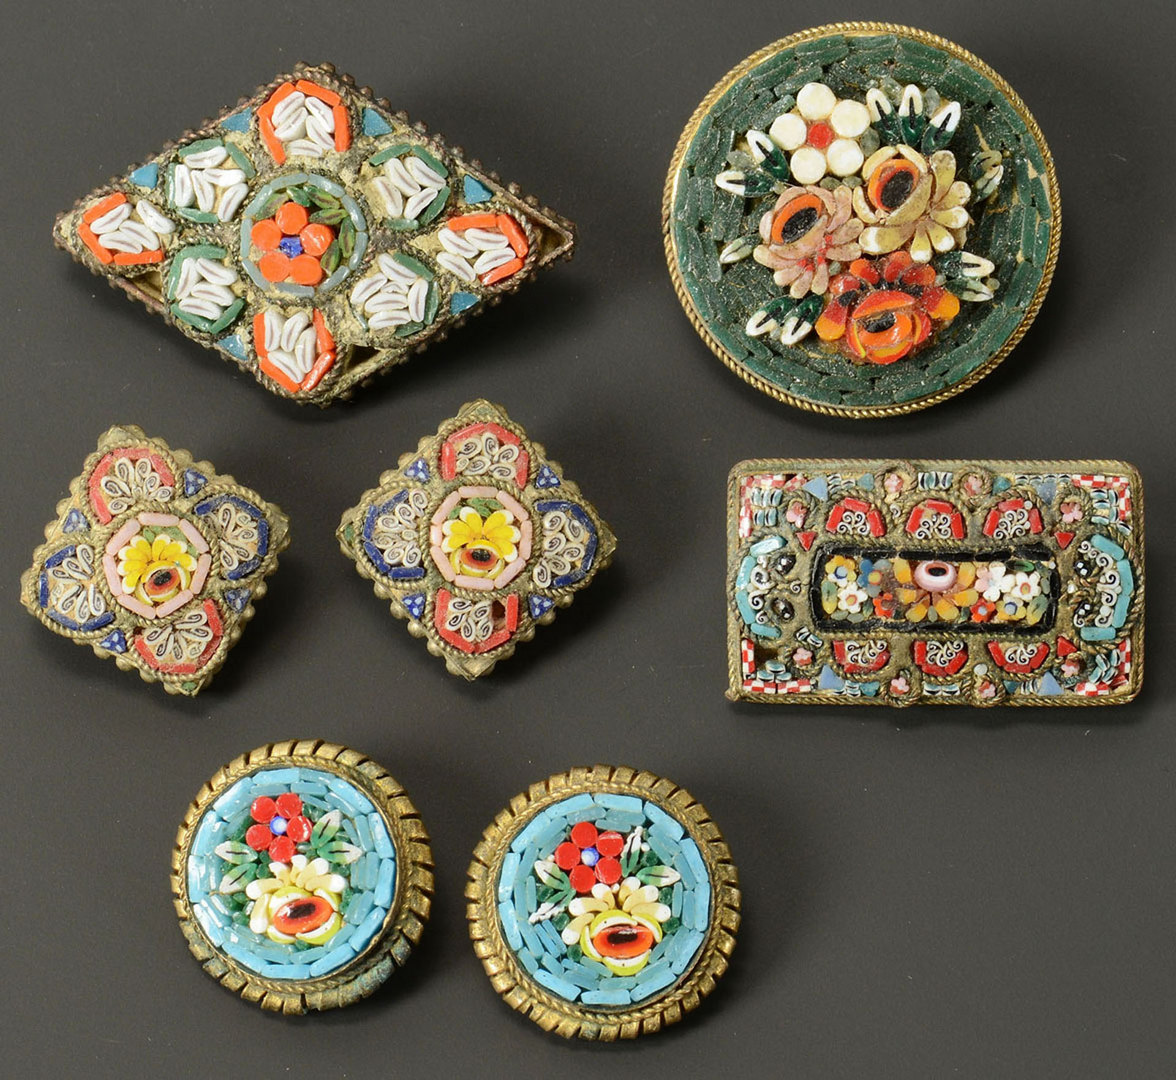 Lot 494: Group of Vintage Italian Micromosaic Jewelry